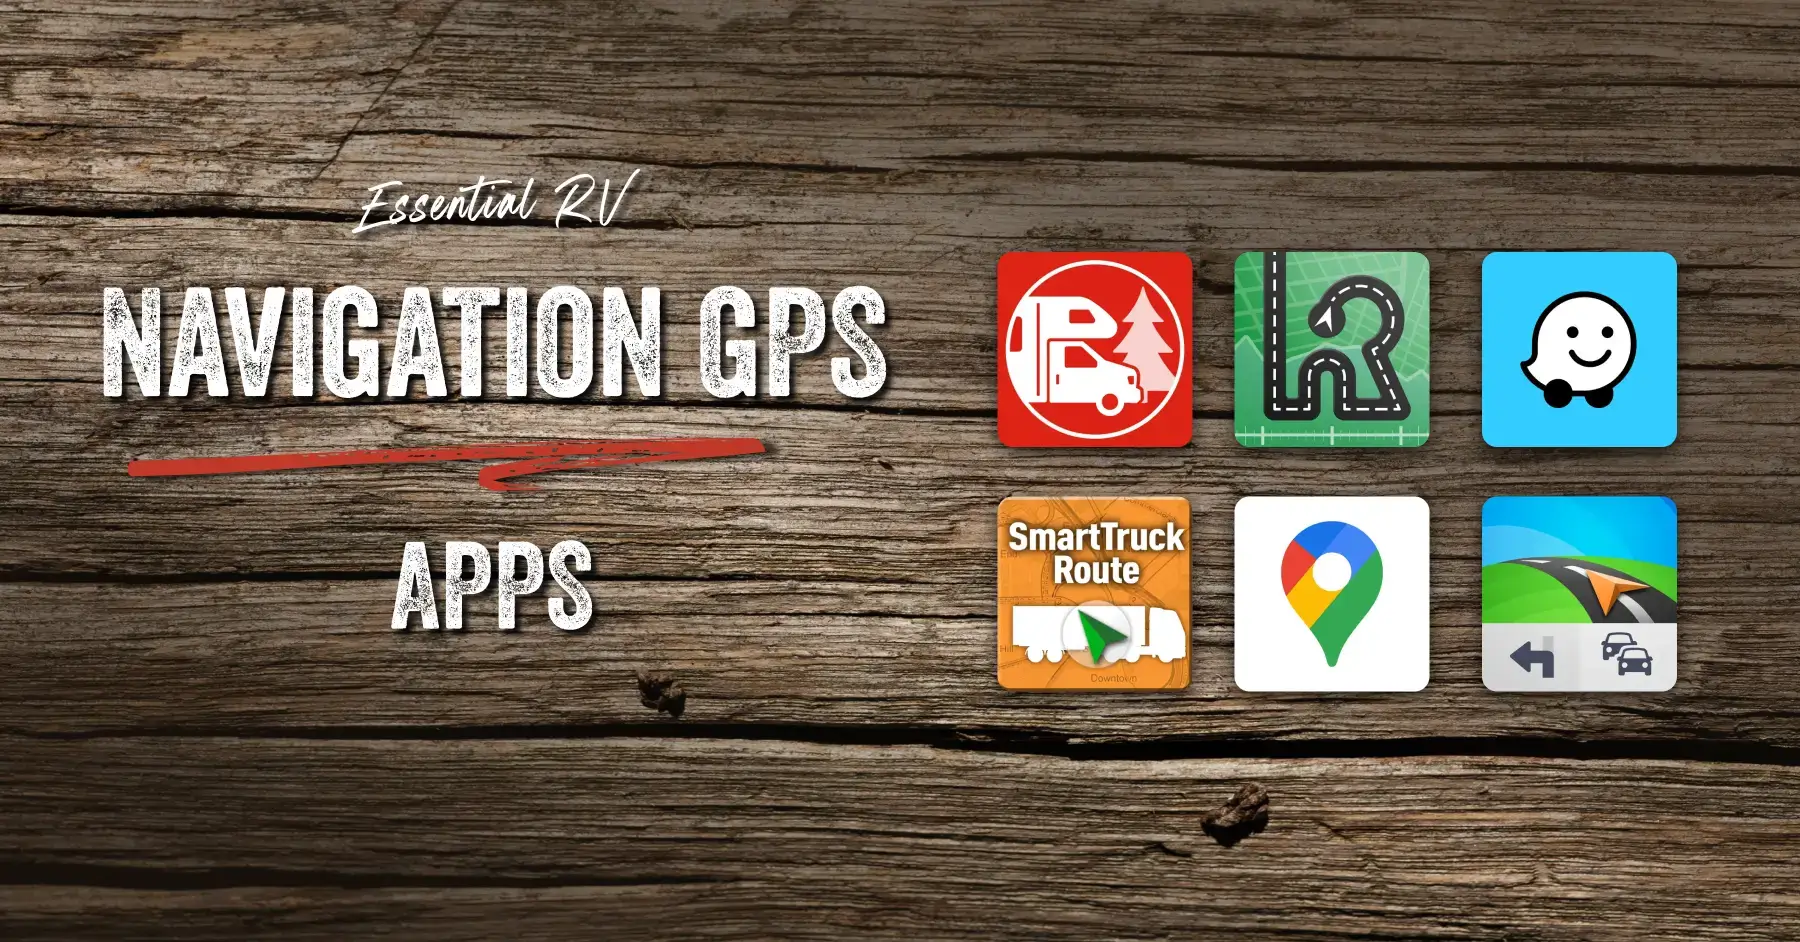 RV-Navigation-GPS-Apps-Best-Listings-01